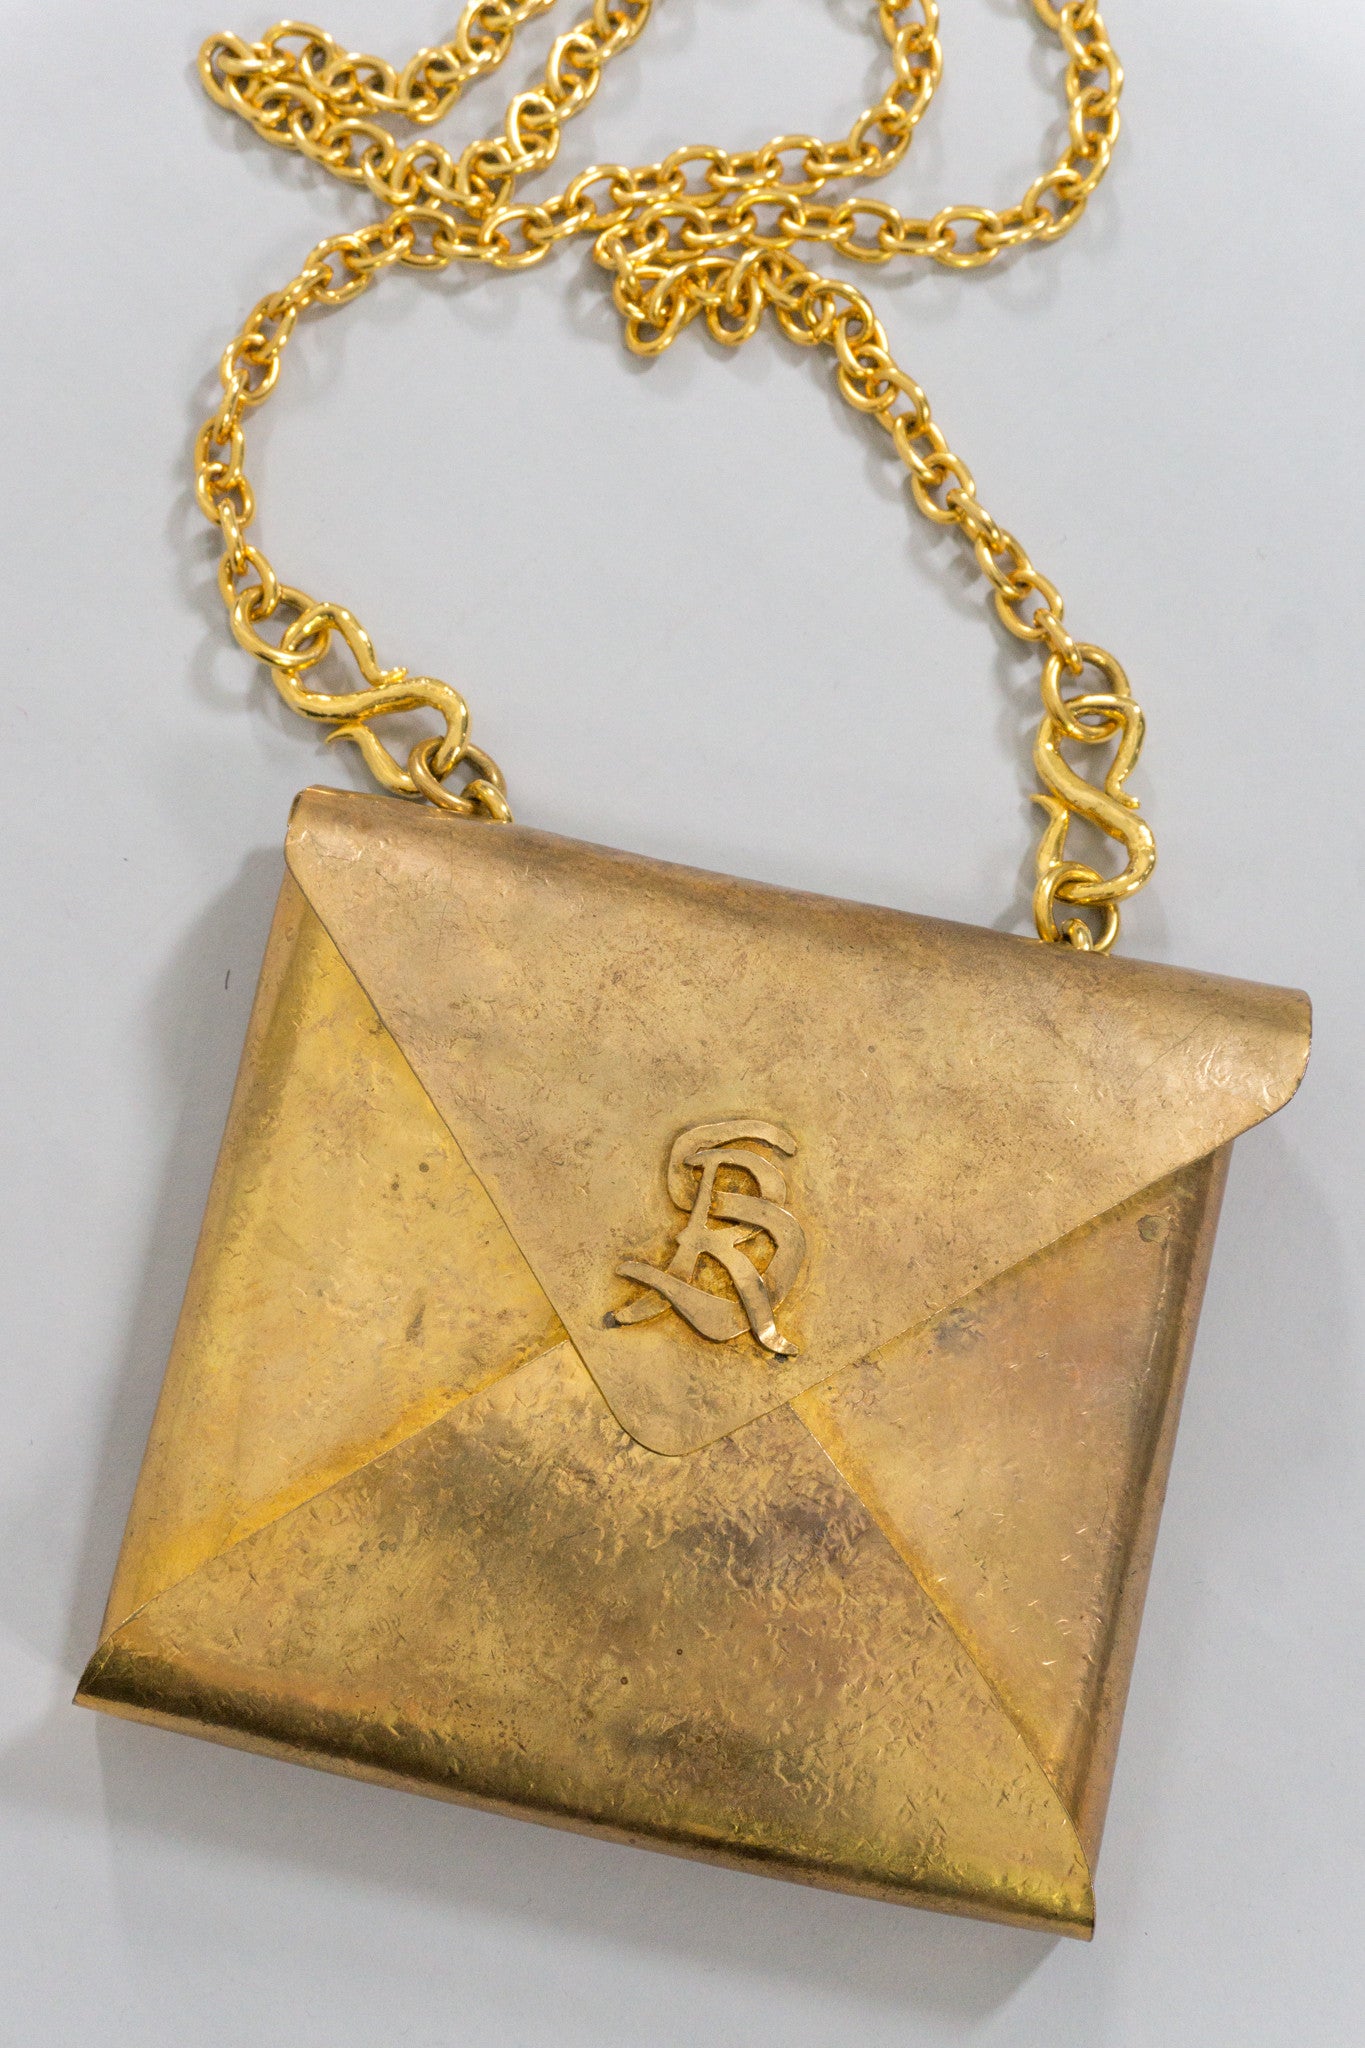 Sonia Rykiel Brass Envelope Chain Clutch Bag